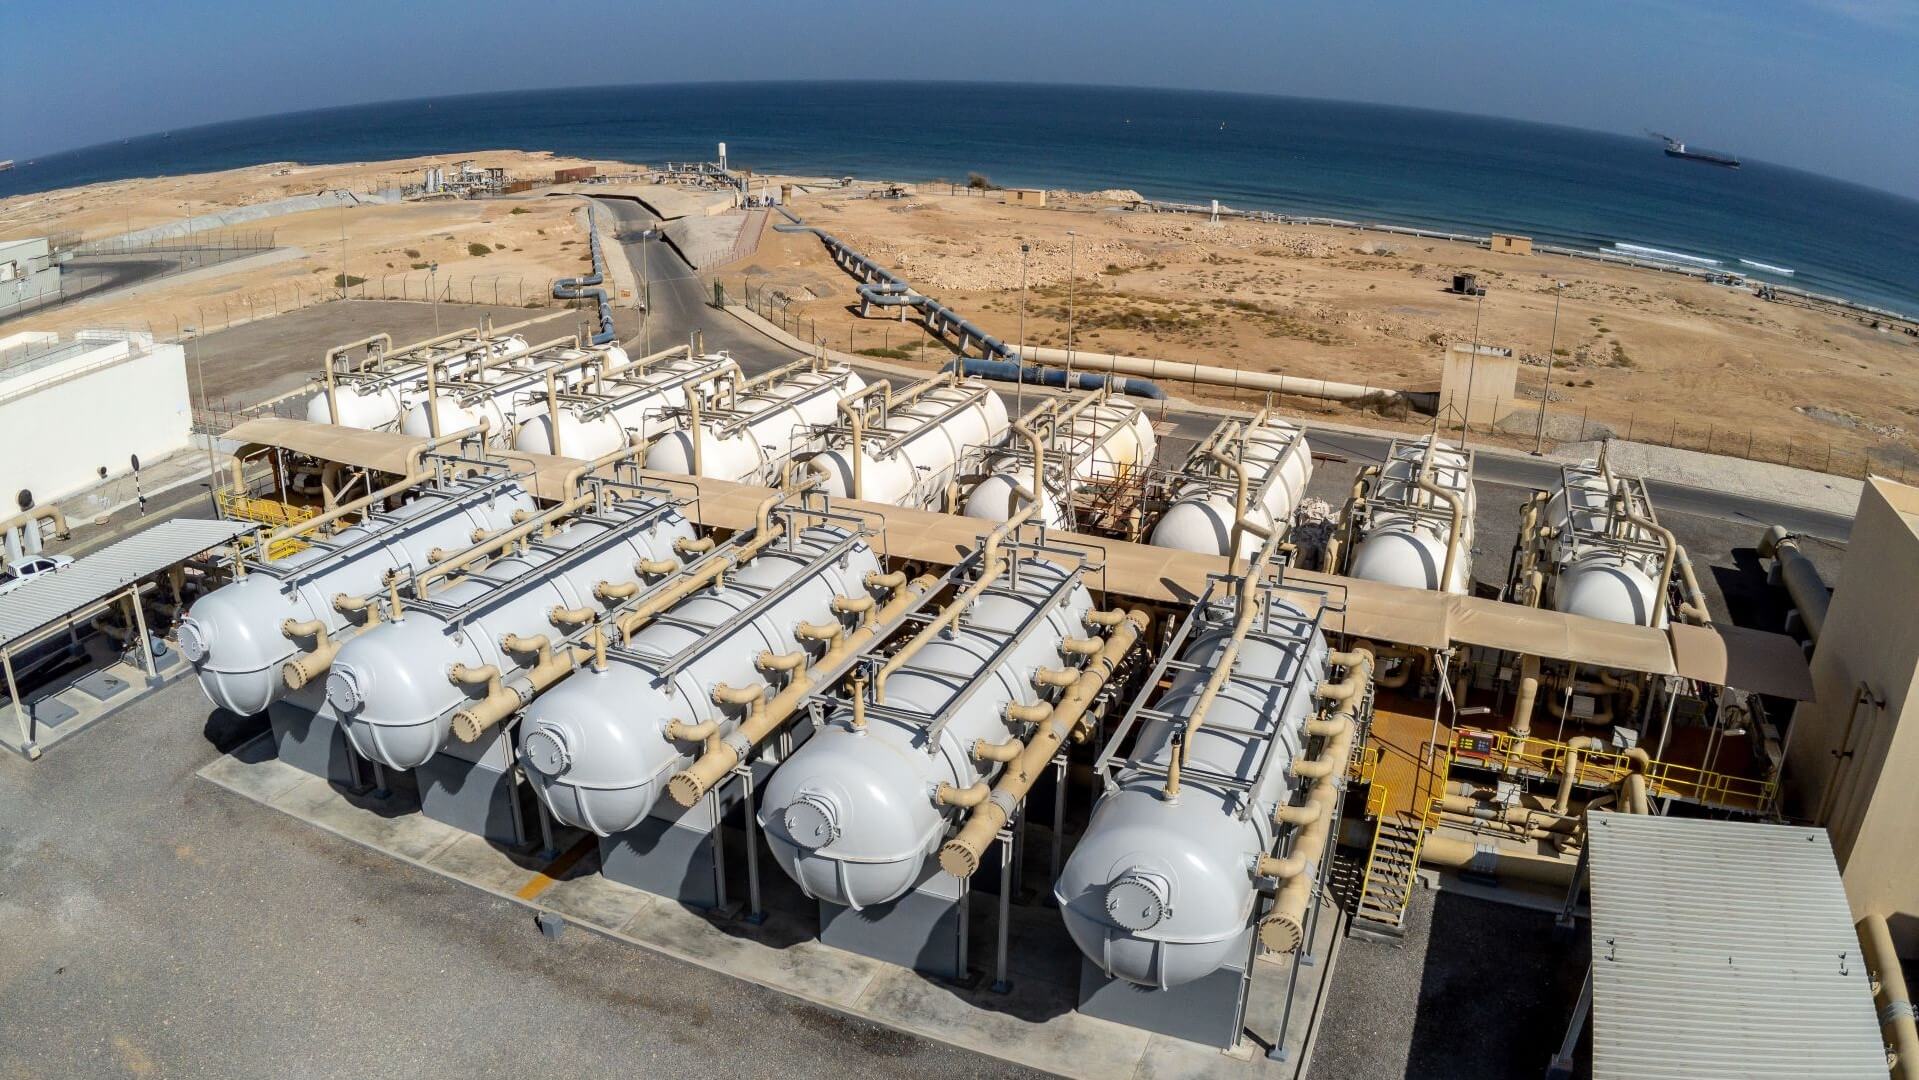 Aerial photo of Sharqiyah desalination plant in Oman